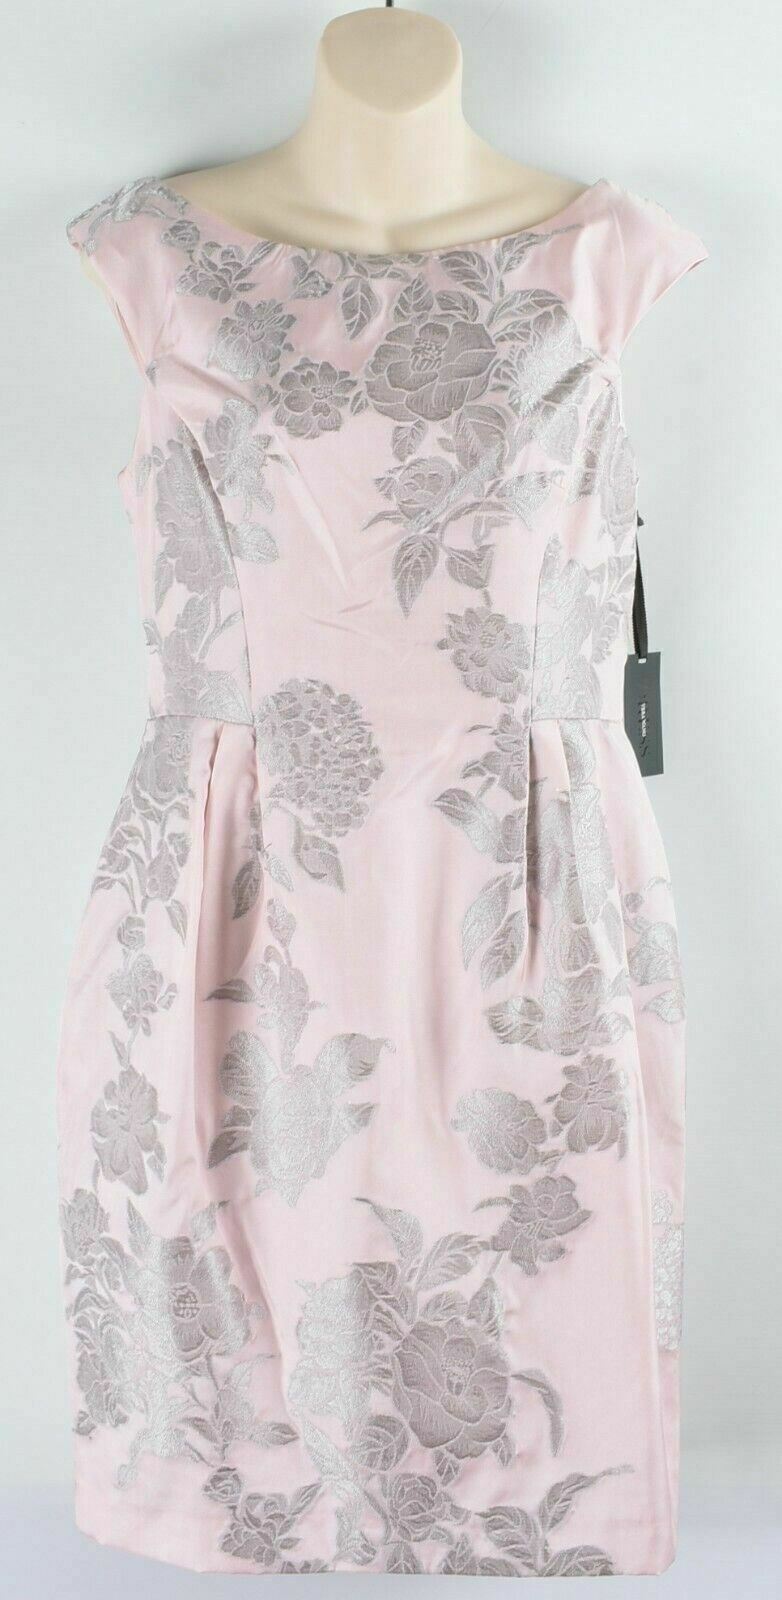 VERA WANG Women's Pink & Silver Floral Sheath Dress, size UK 10